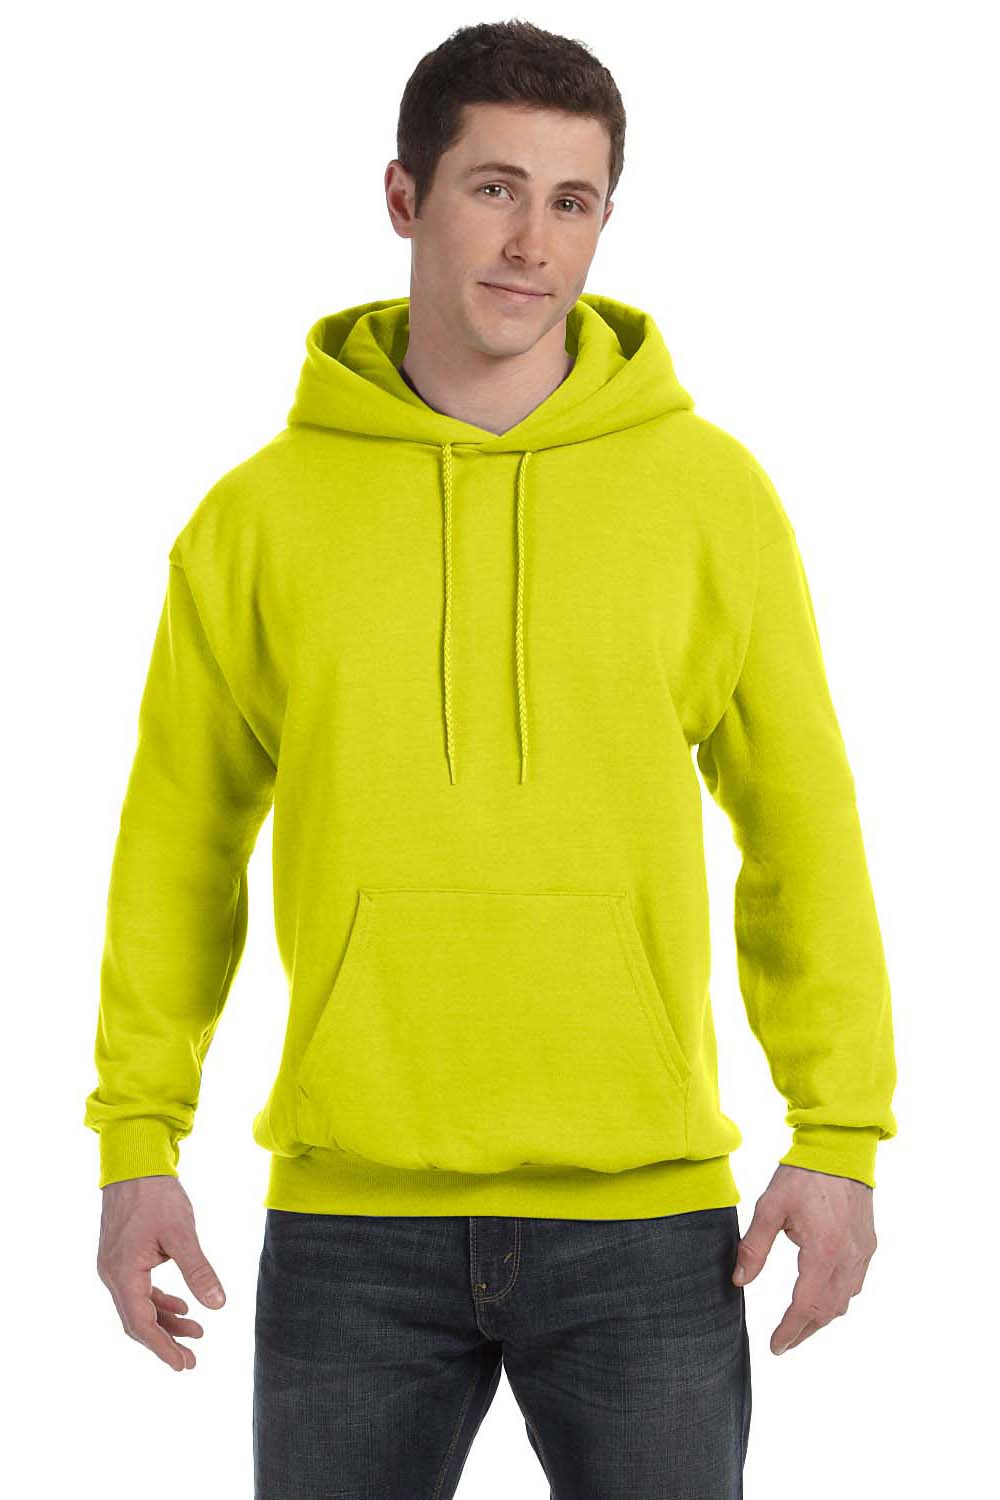 Hanes P170 Mens EcoSmart Print Pro XP Hooded Sweatshirt Hoodie Safety Green Front